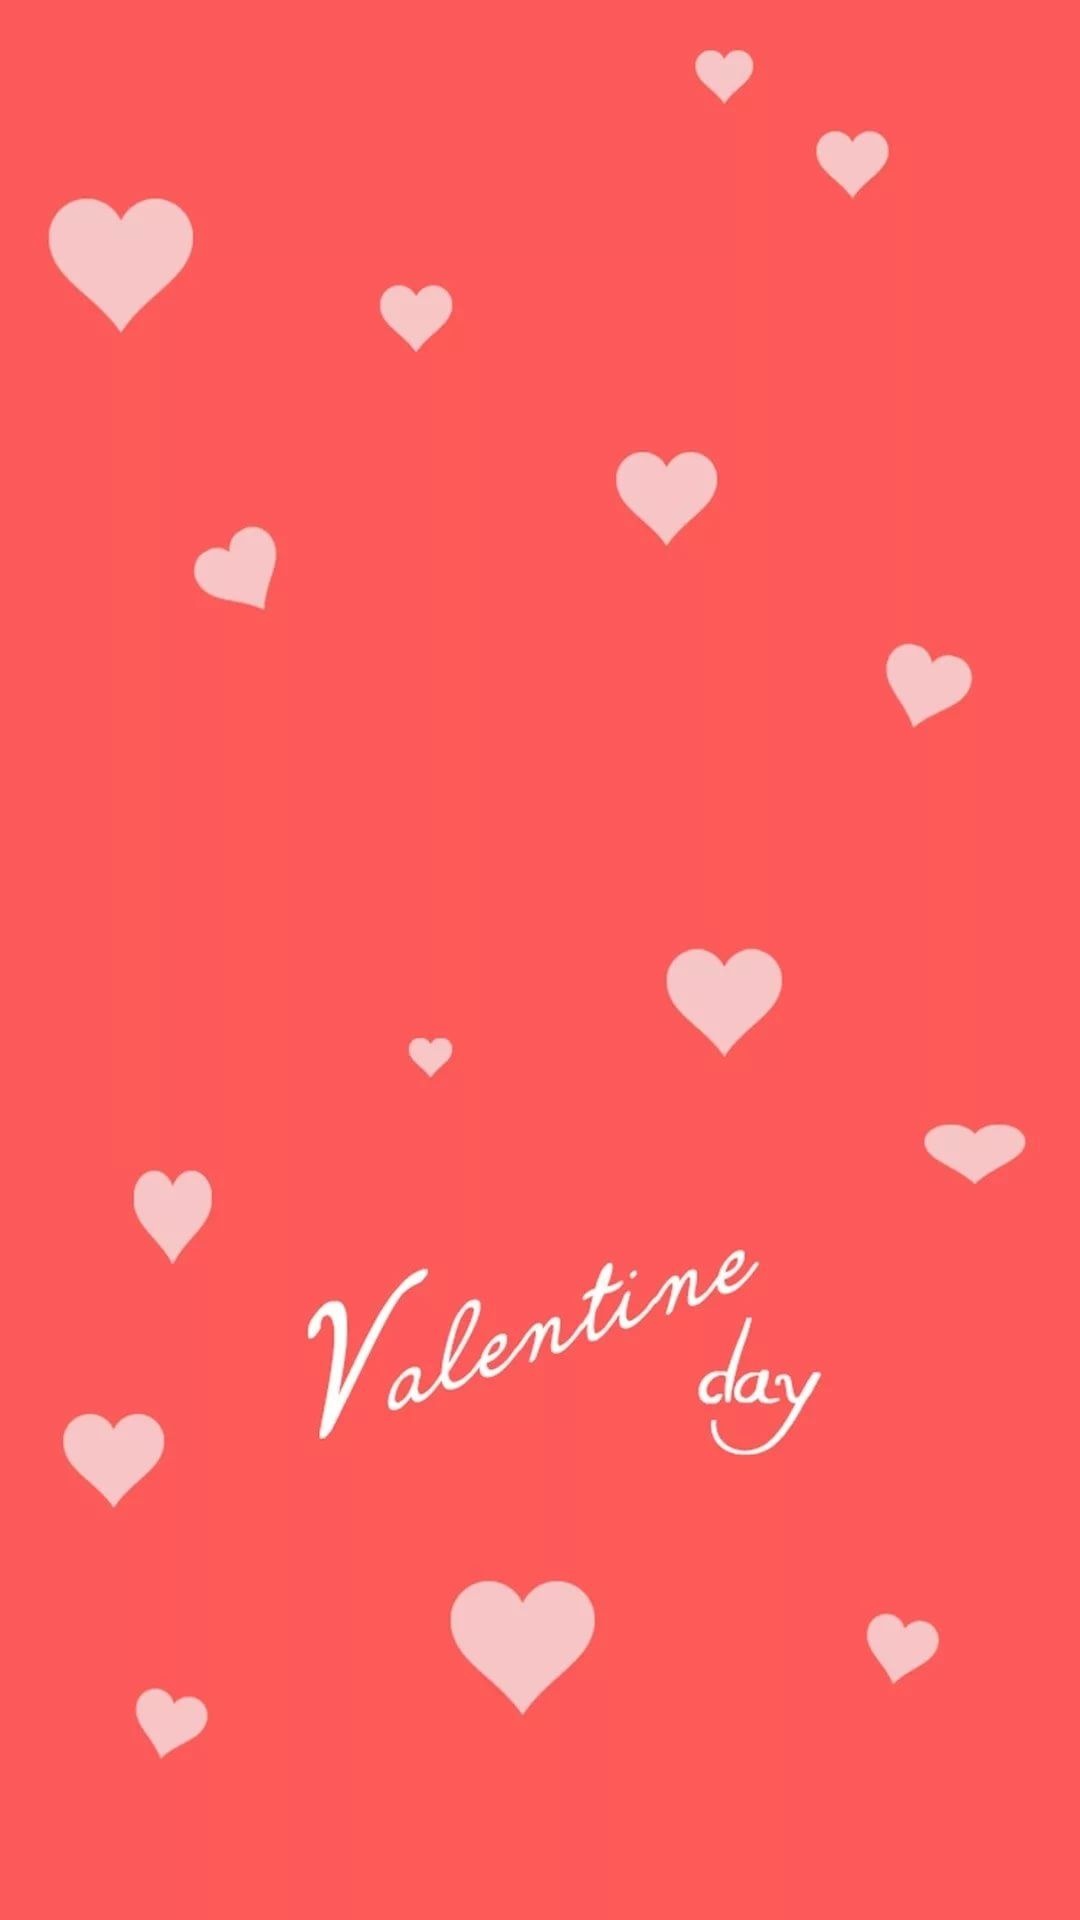 Valentine's Day, Love and romance, Heartfelt affection, Sweet treats, 1080x1920 Full HD Handy